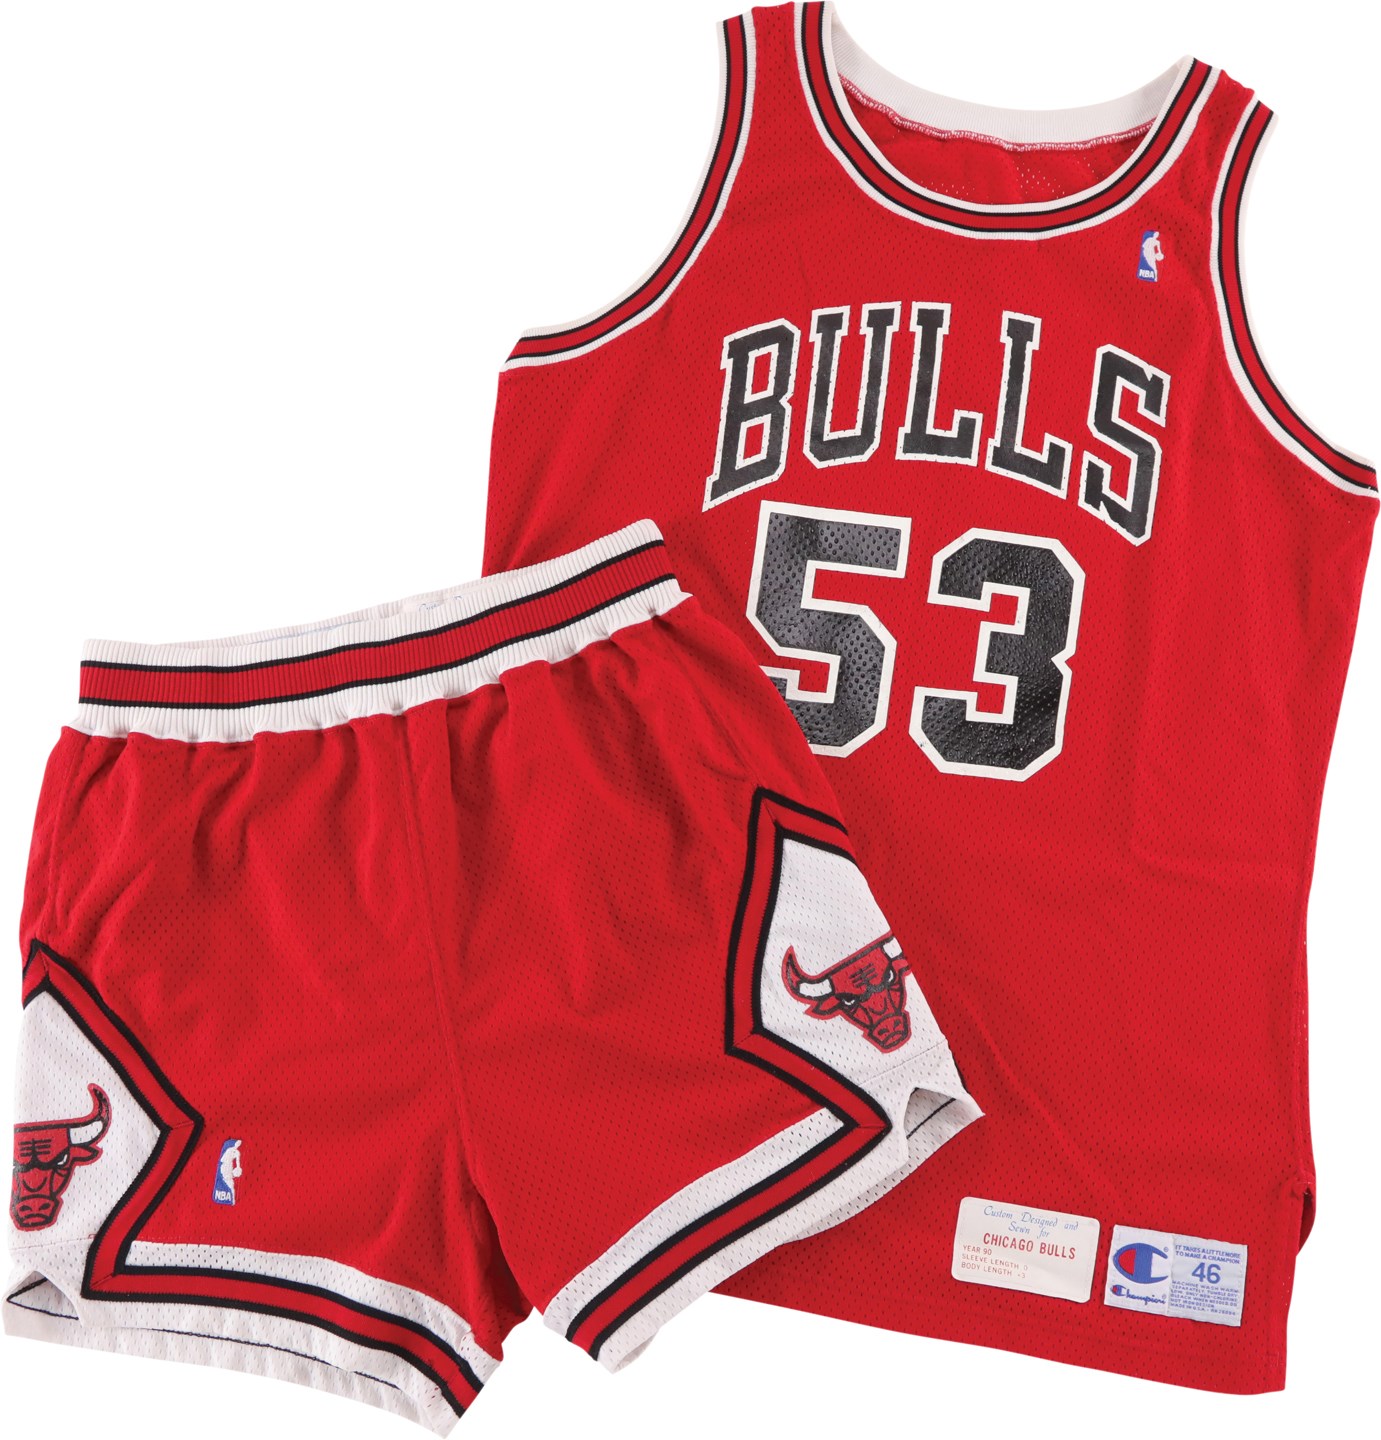 - 1990-91 Cliff Levingston Chicago Bulls Game Worn Uniform